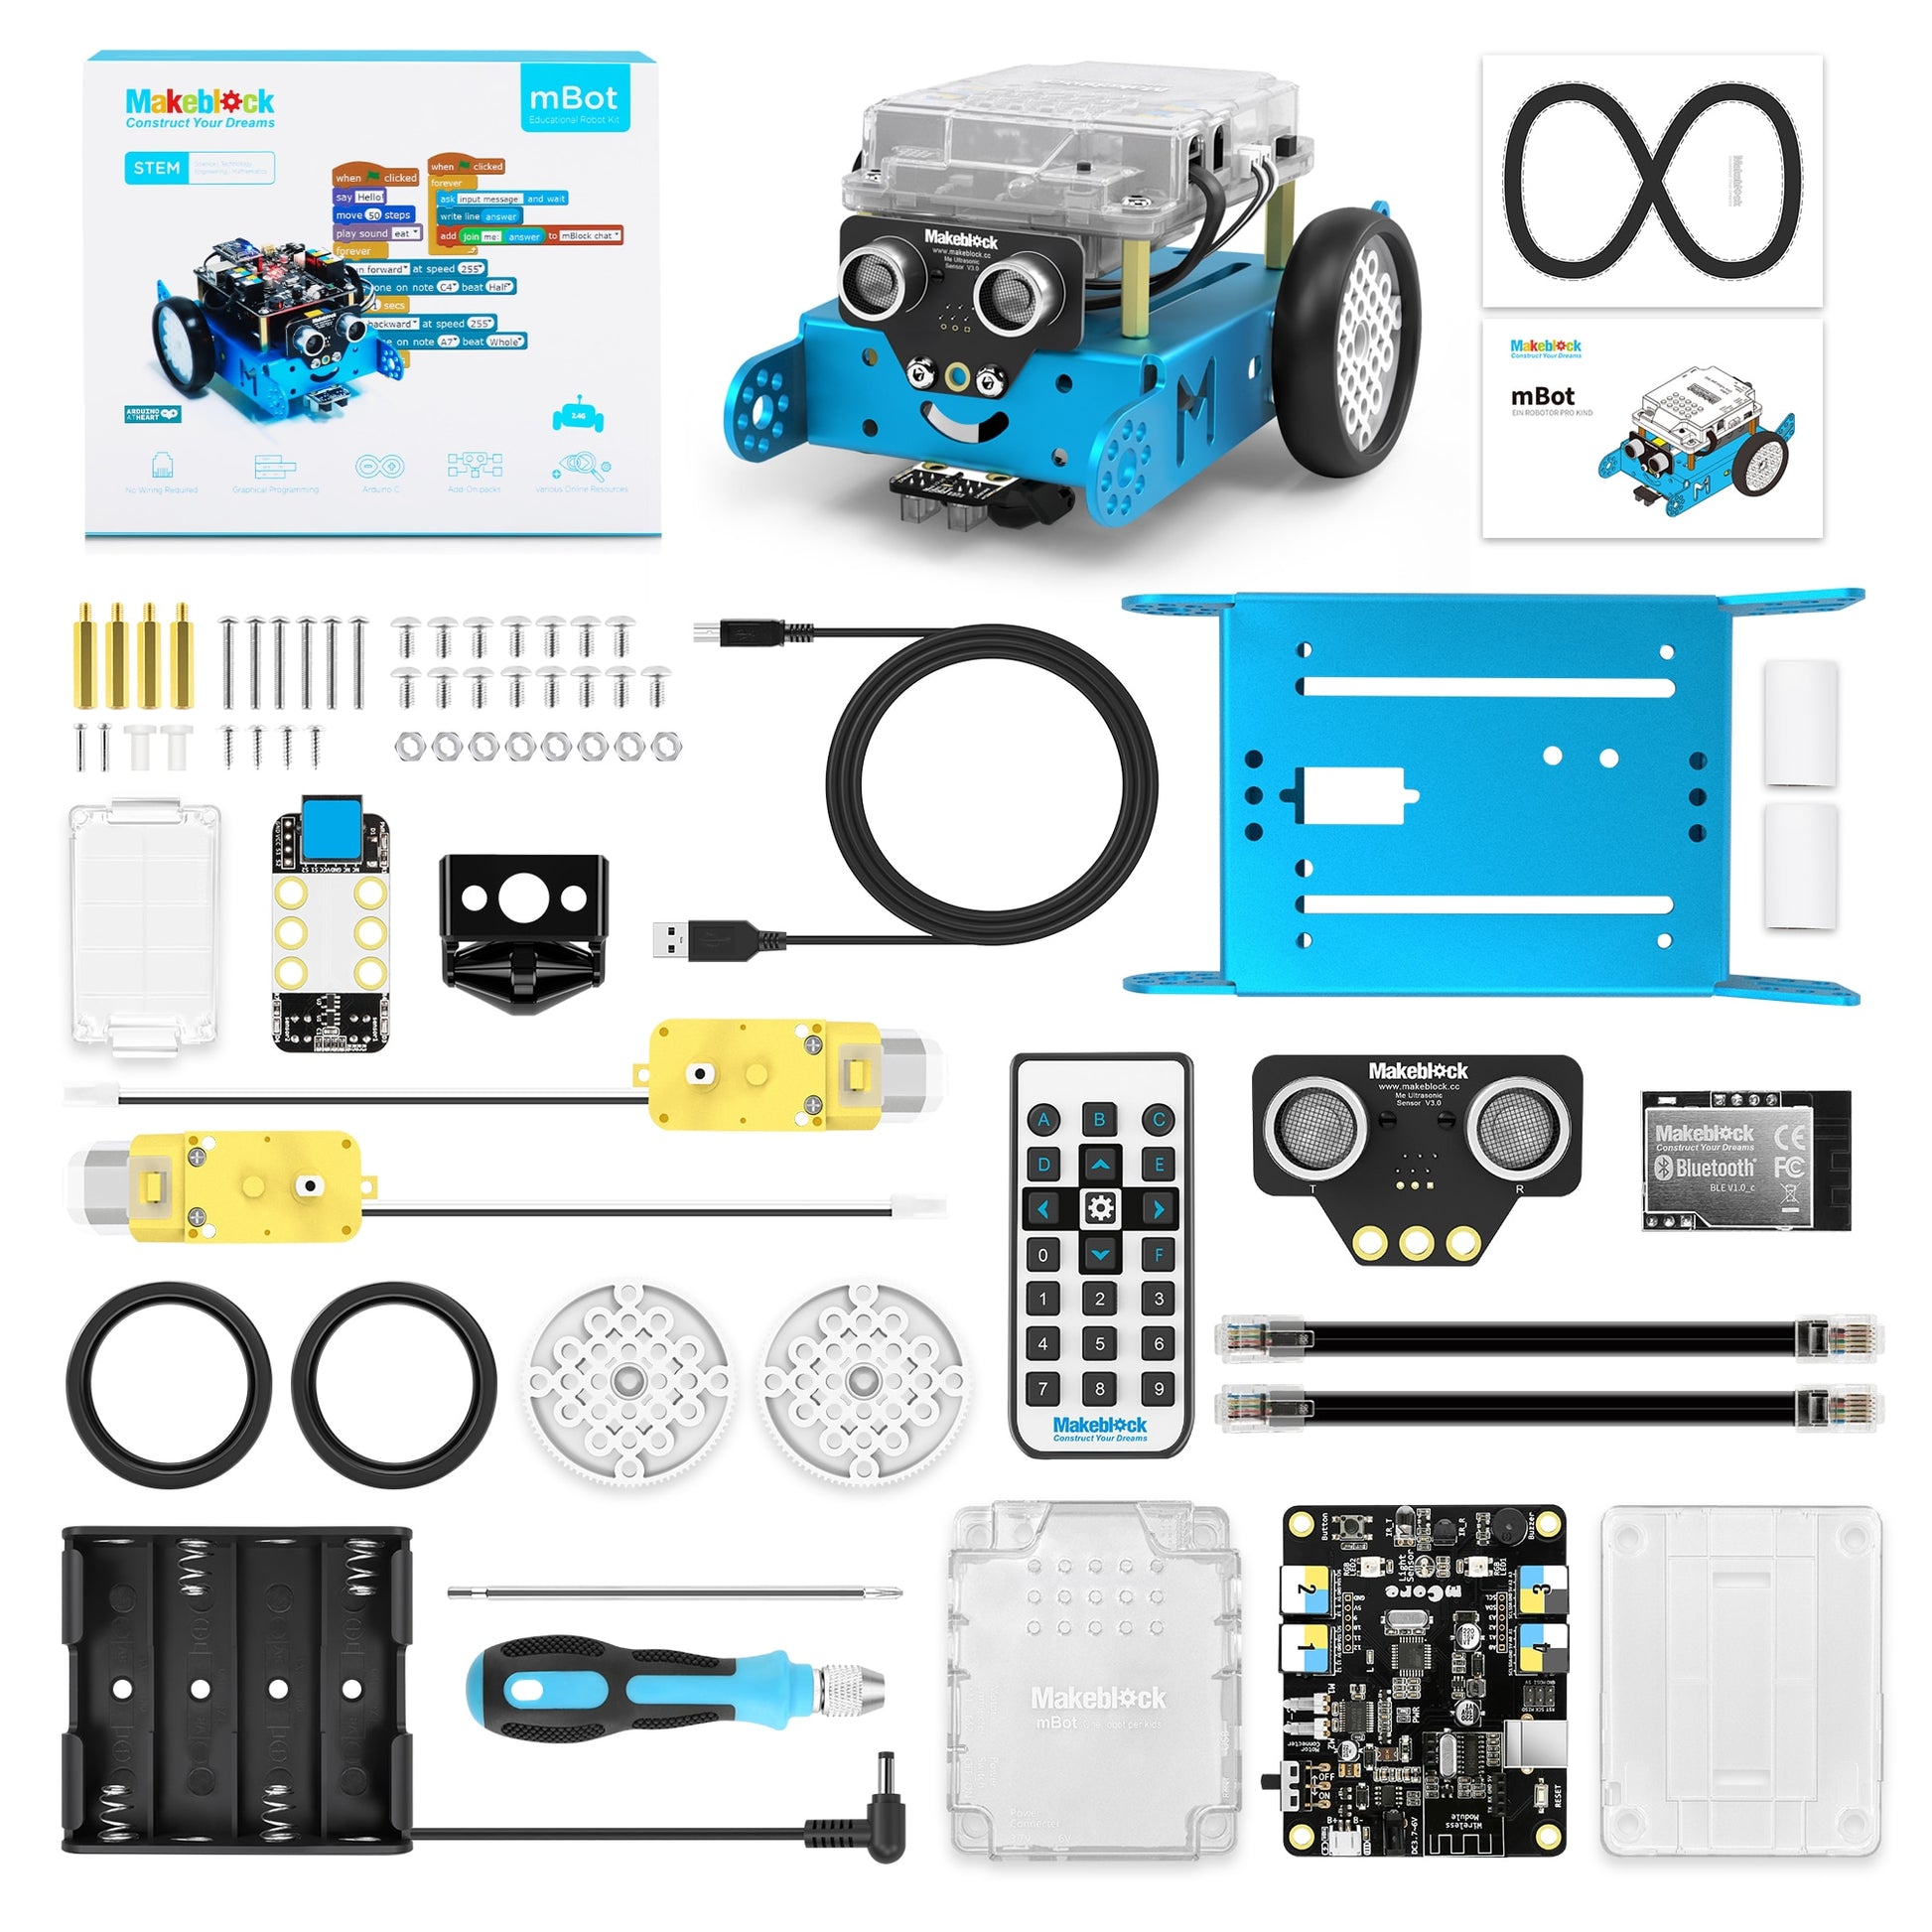 Makeblock mBot DIY Robot Kit, Arduino,Entry-level Programming for Kids, STEM Education. (Blue, Bluetooth Version)